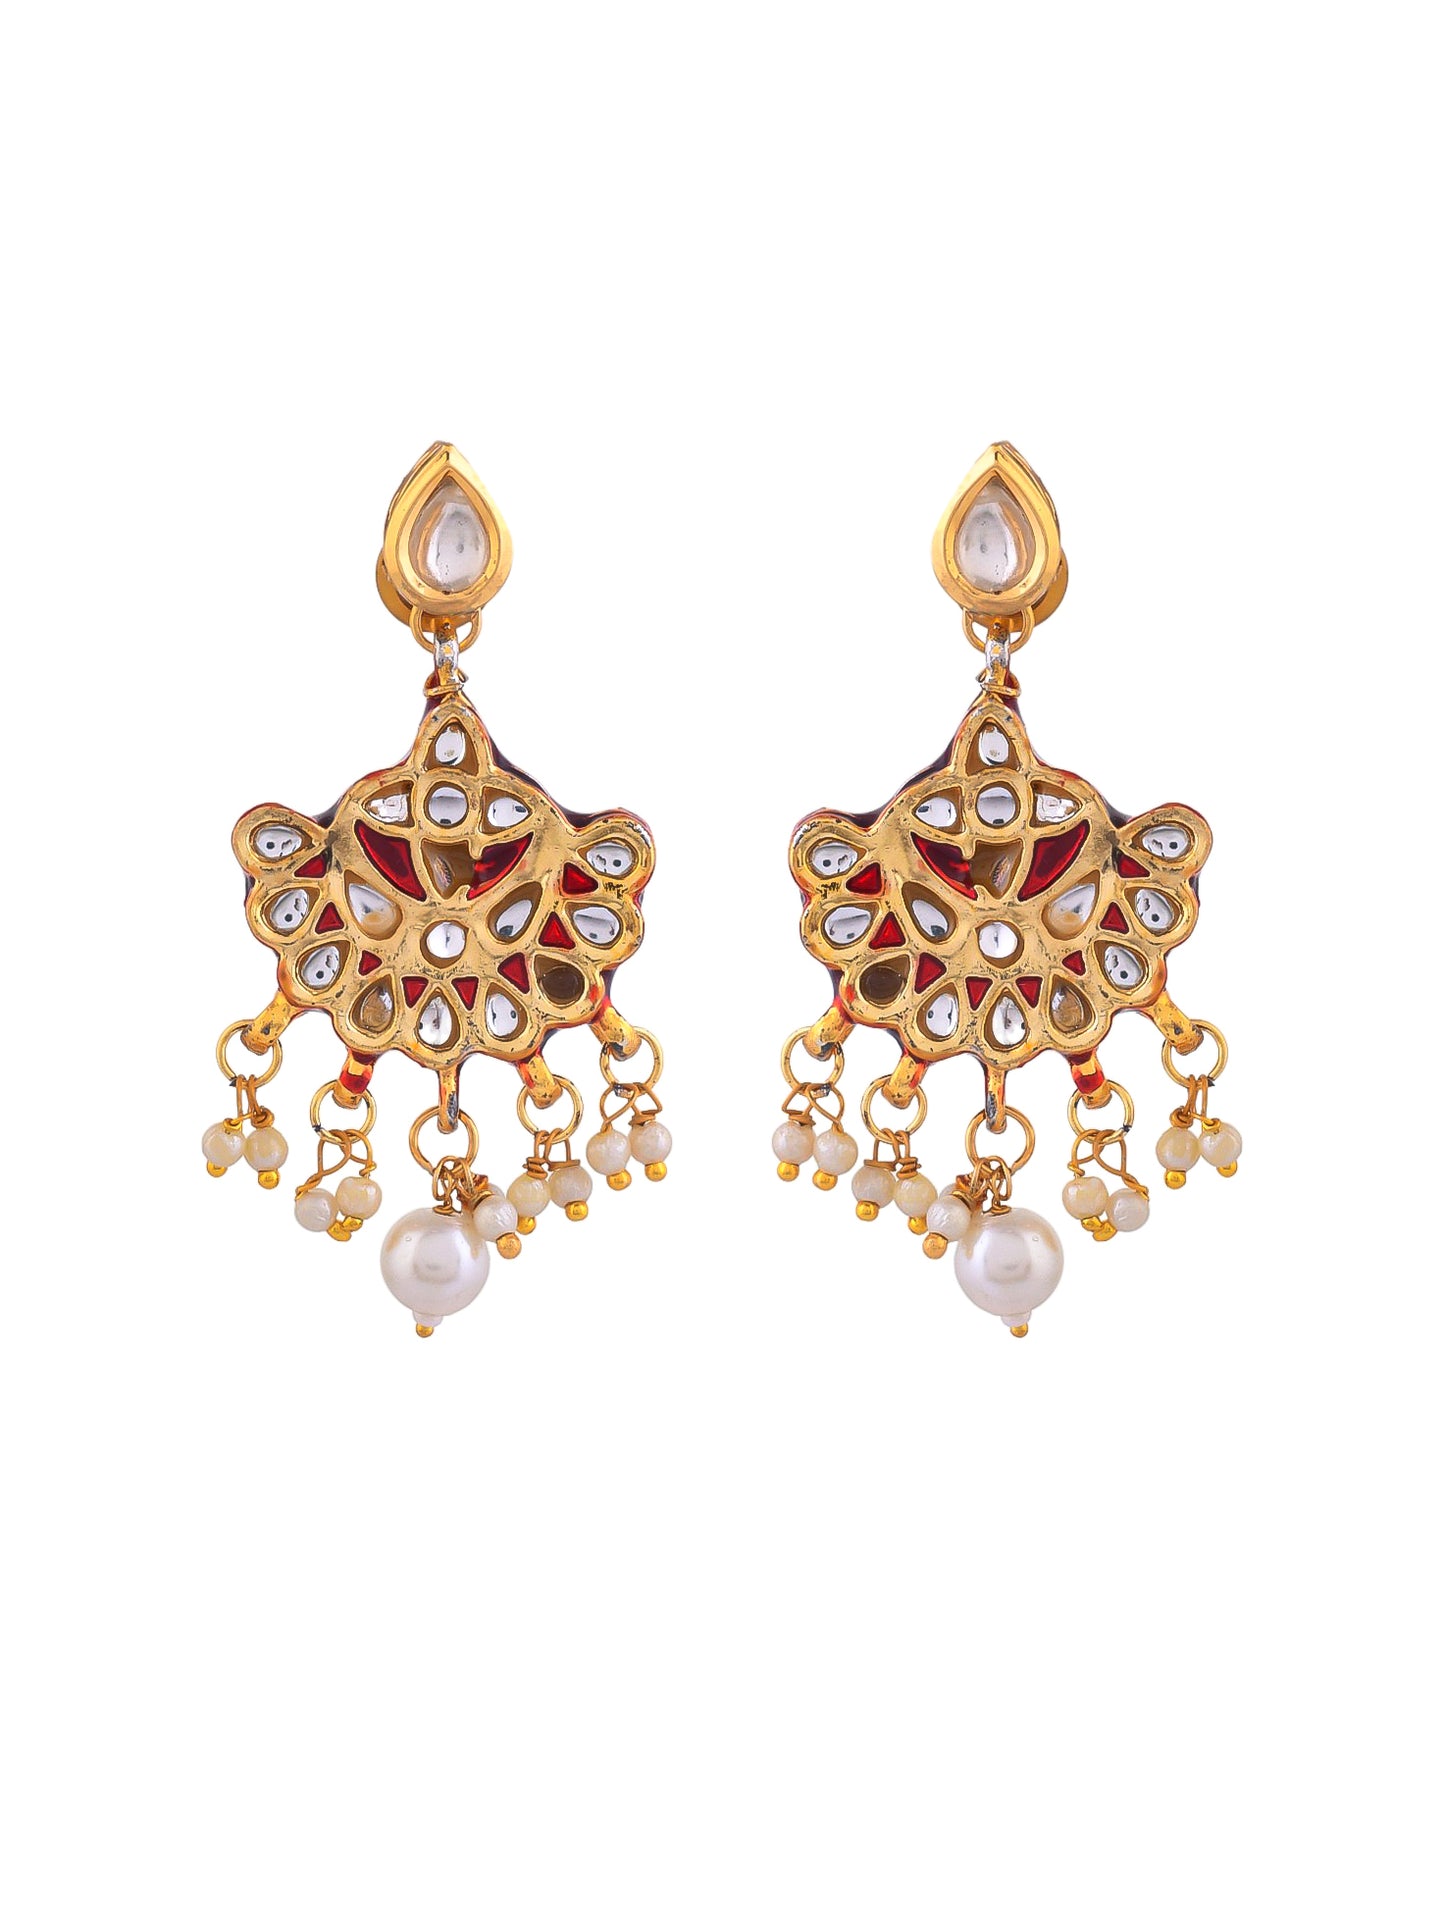 Kundan Pendant Red jewellery set with earrings